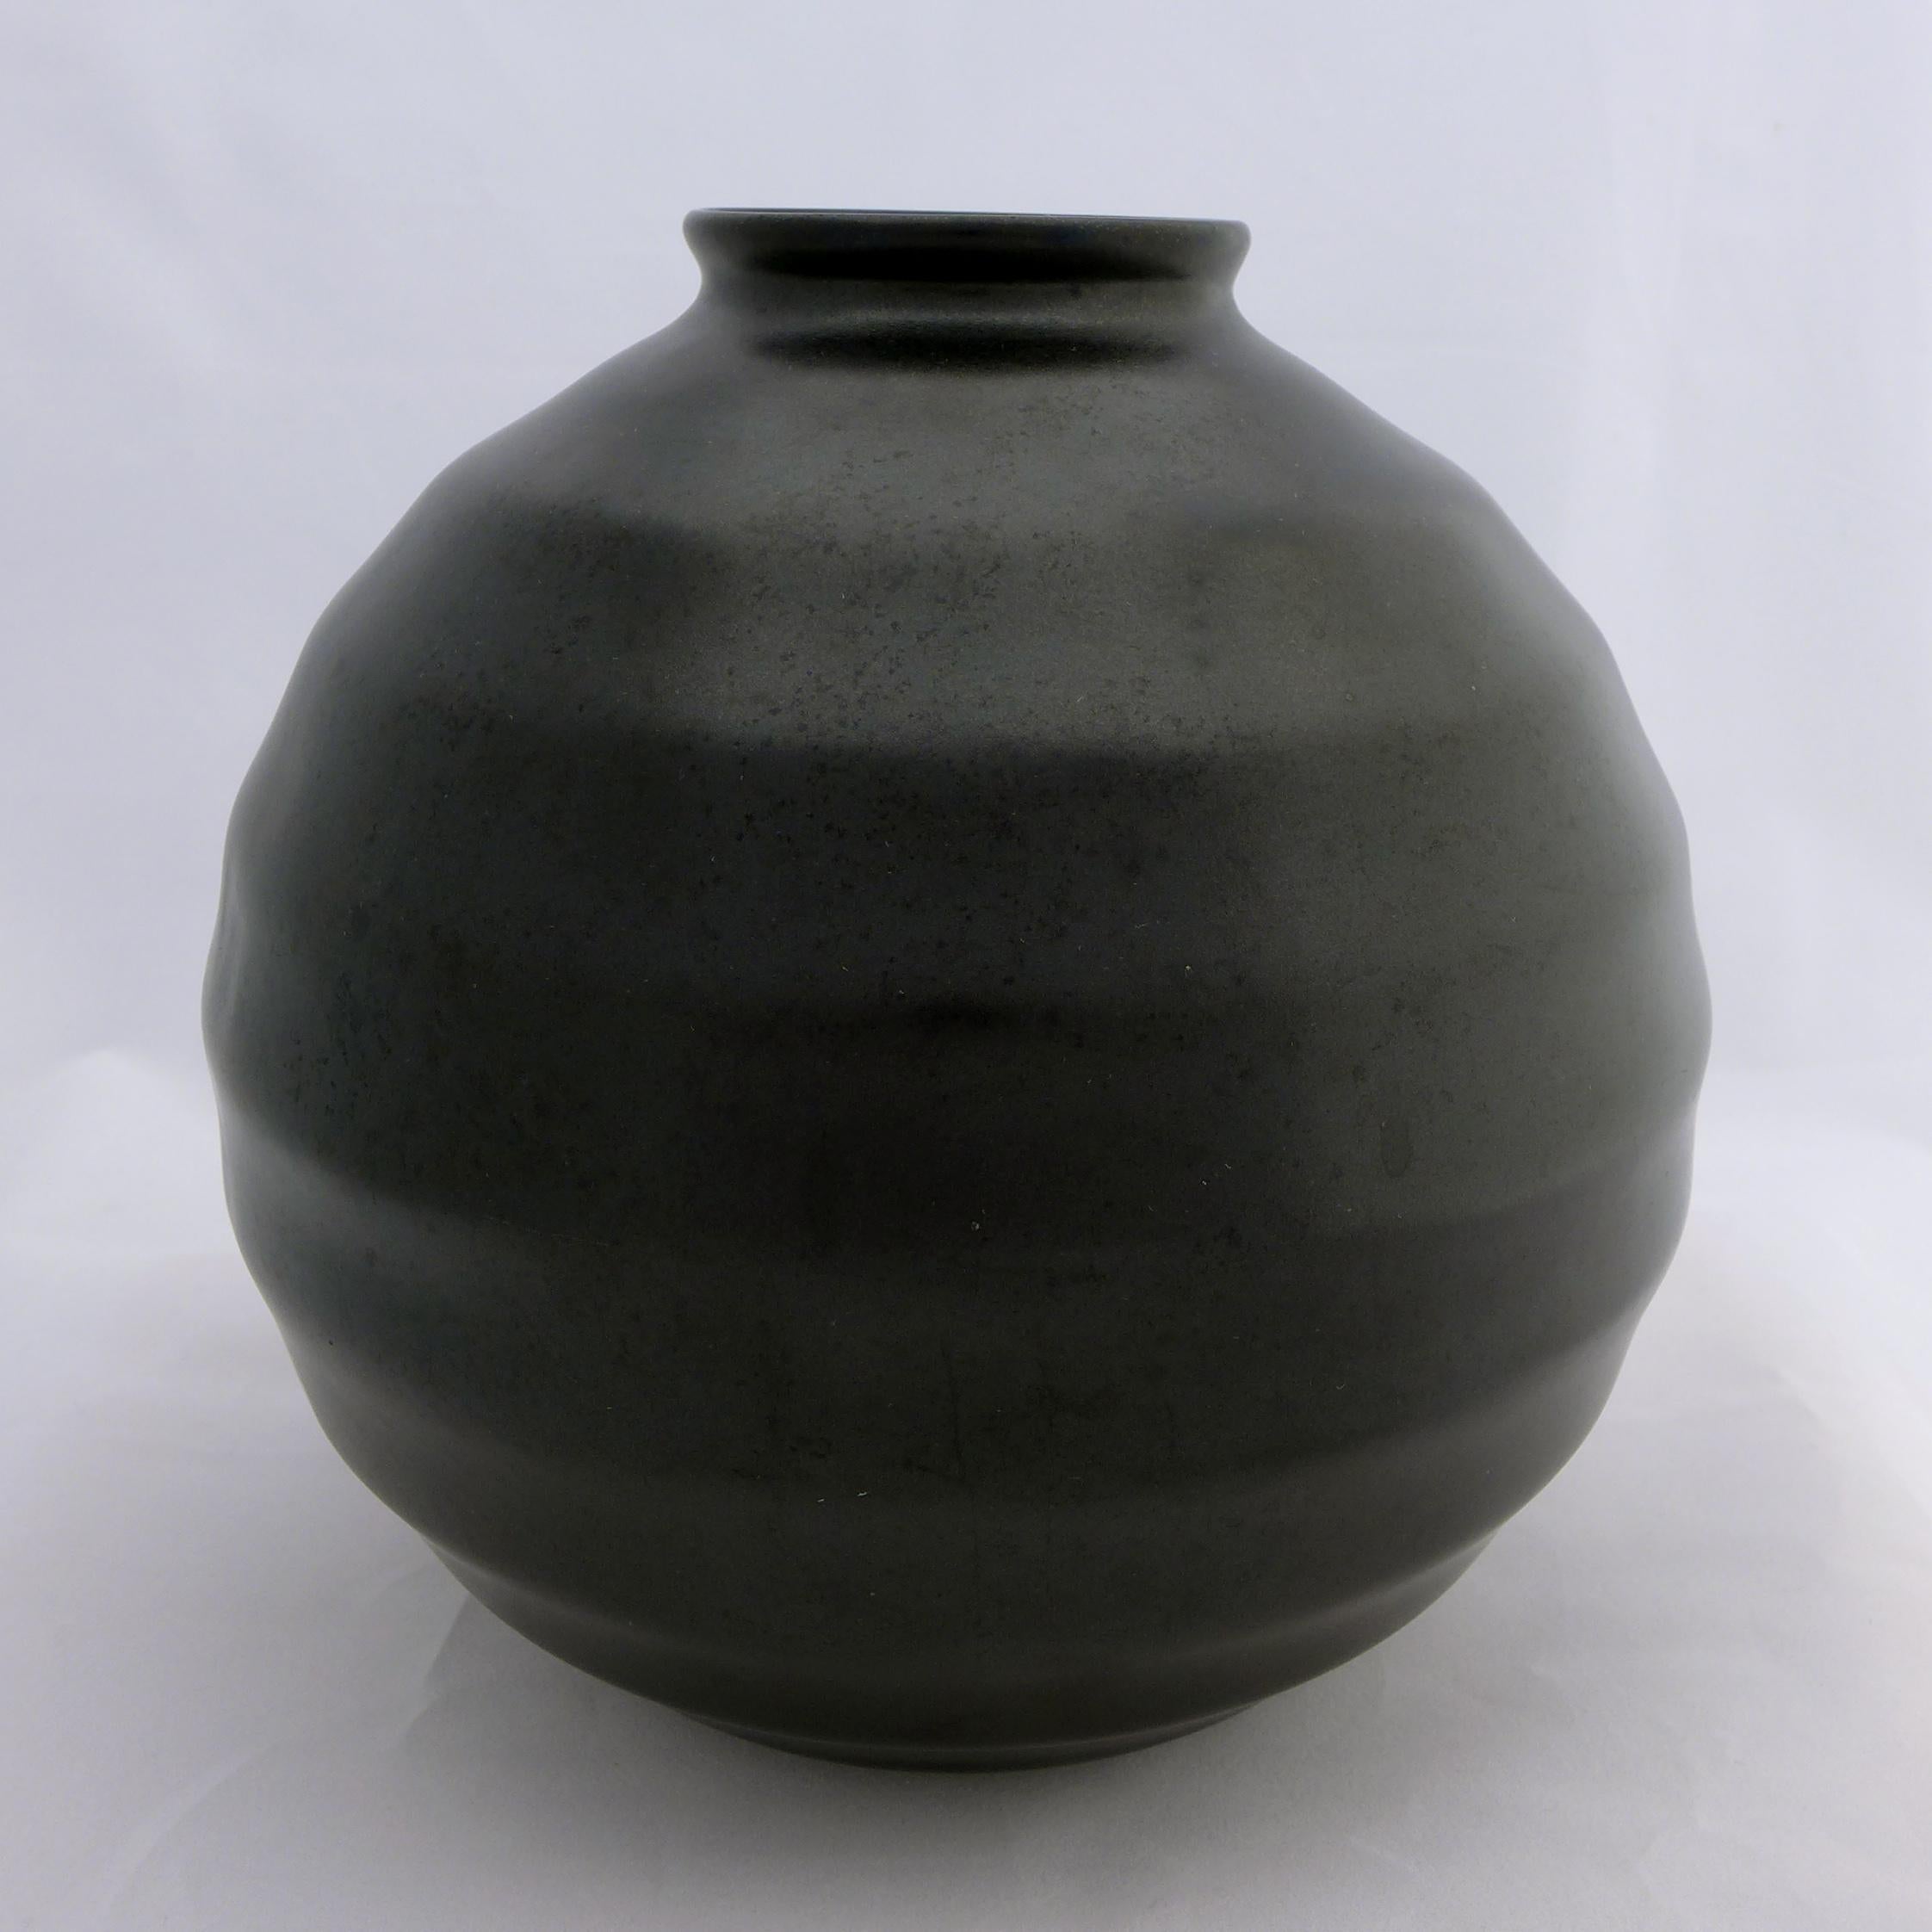 Ribbed ball vase with matte black glaze by Dutch designer Frans van Katwijk (1893-1952), produced by Plateelbakkerij Schoonhoven, the Netherlands, circa 1935.